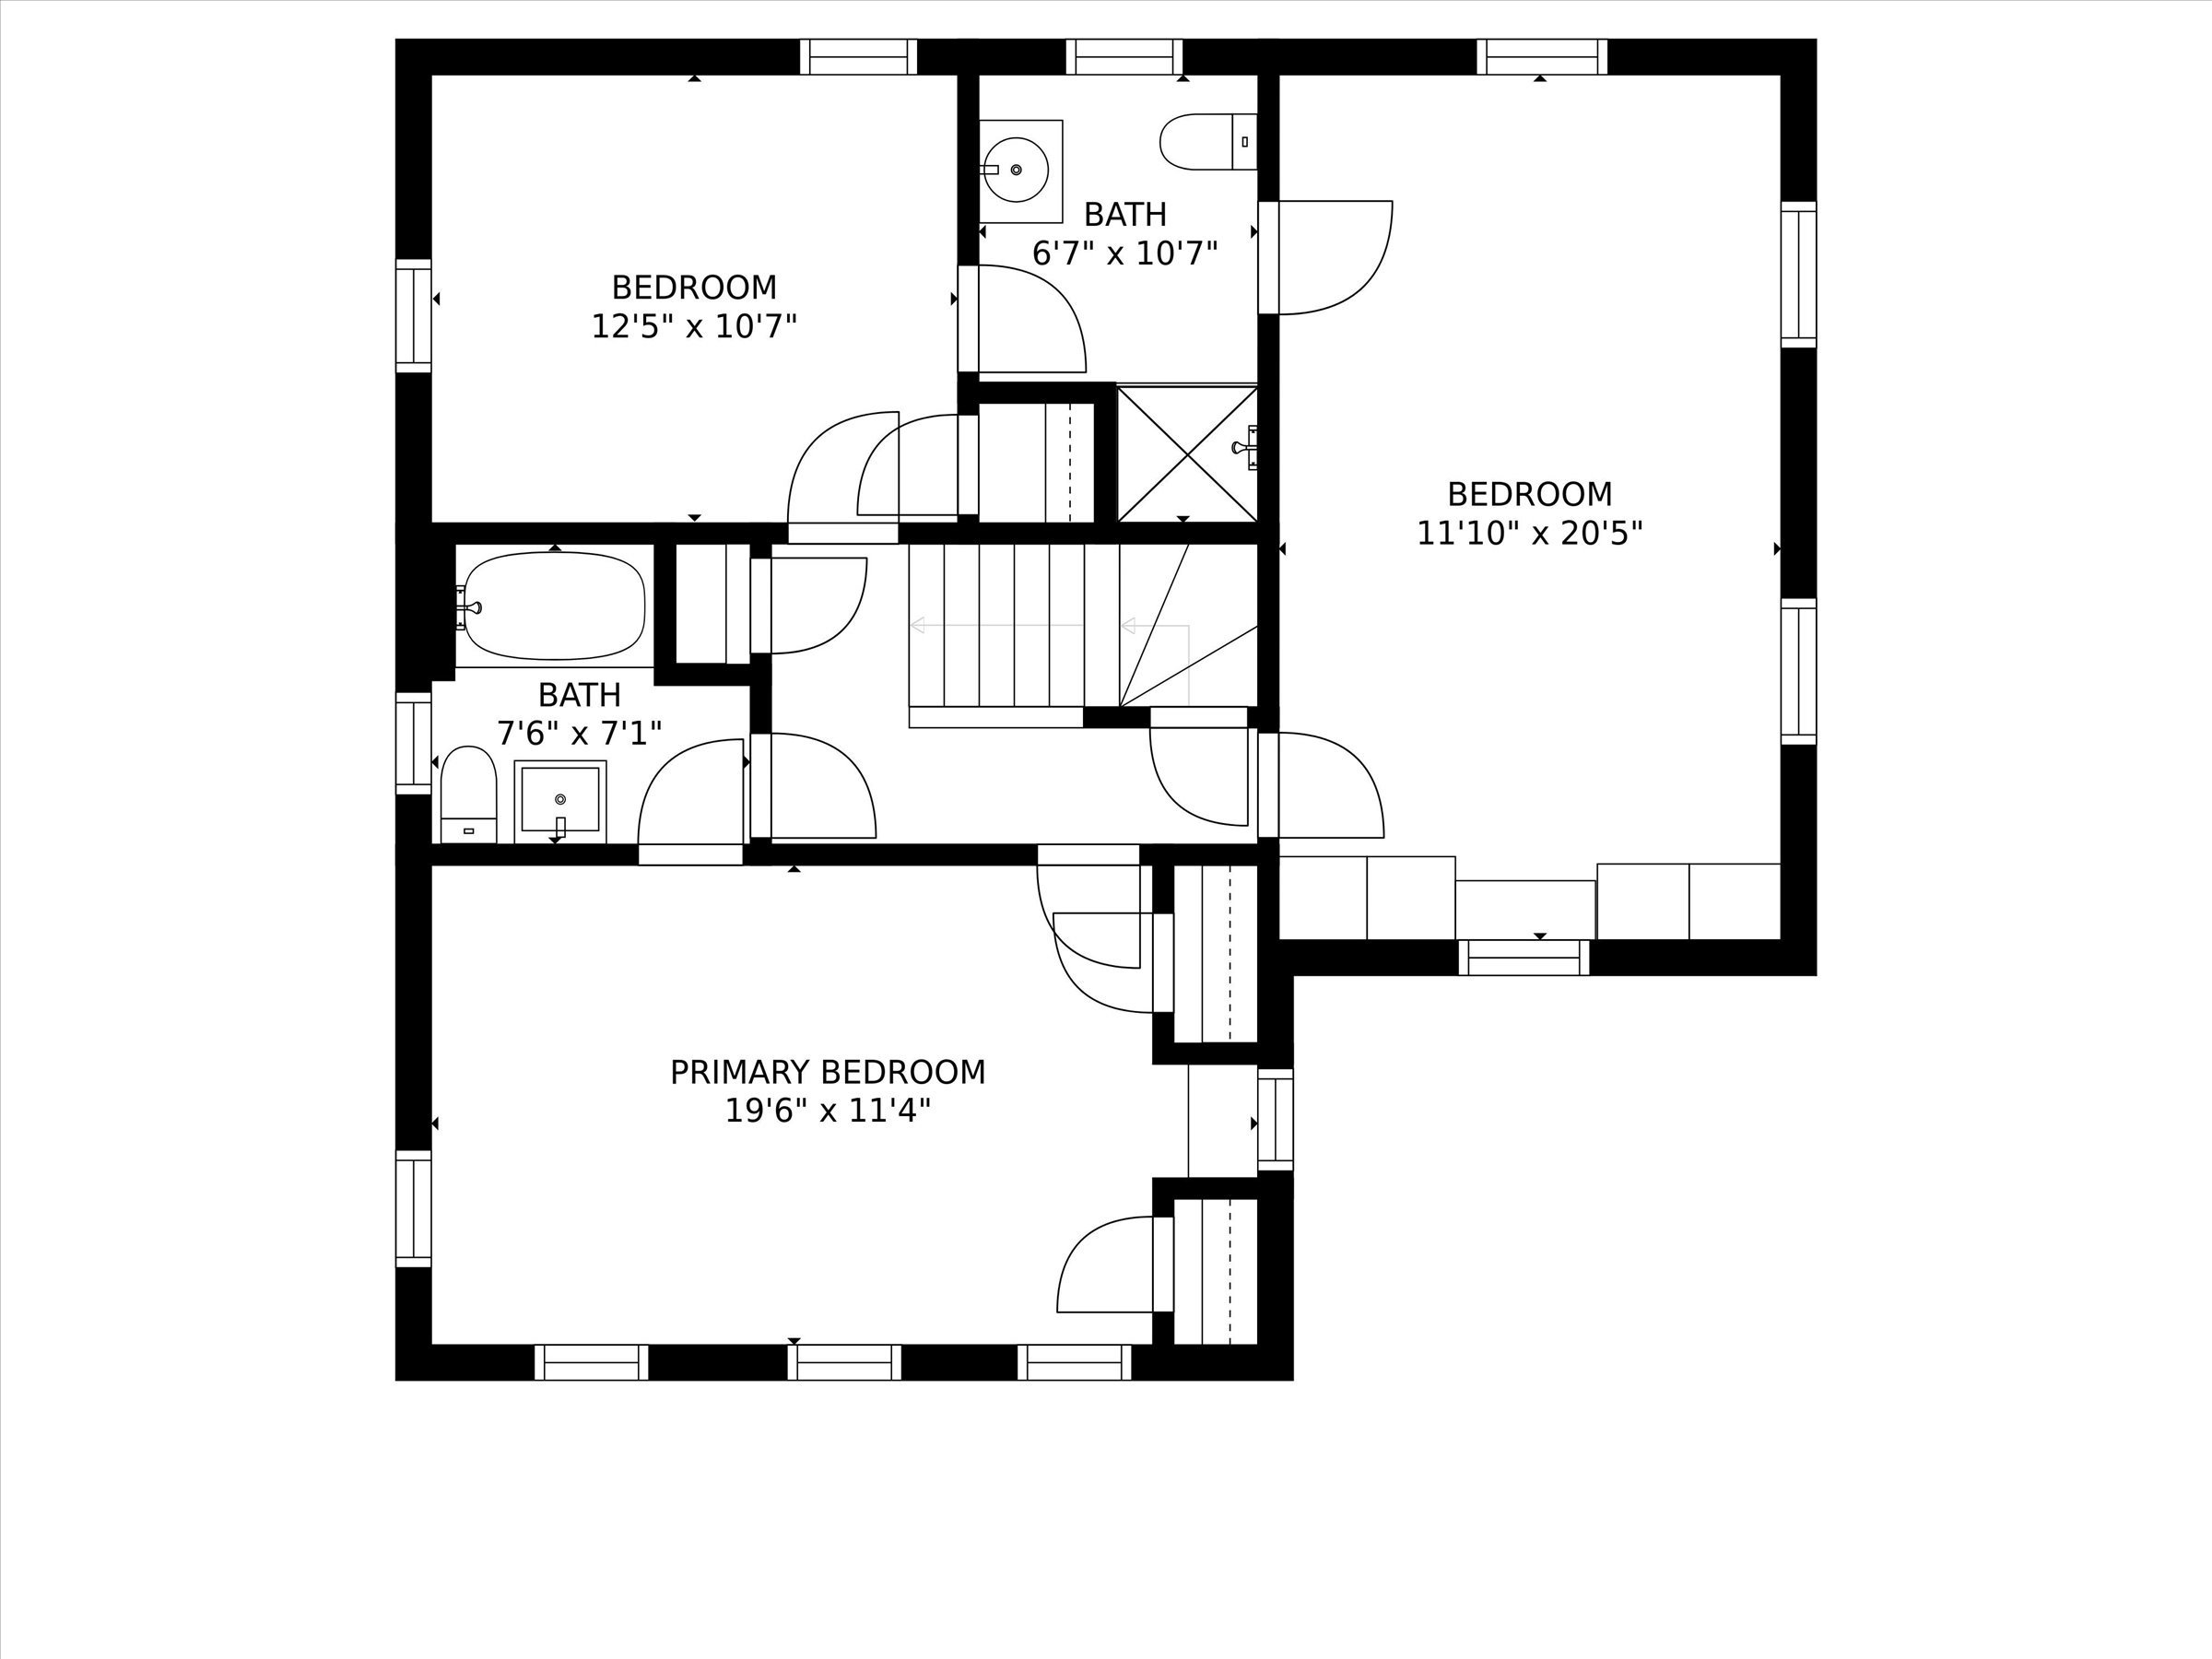 4-Floorplan - Second Floor.jpg